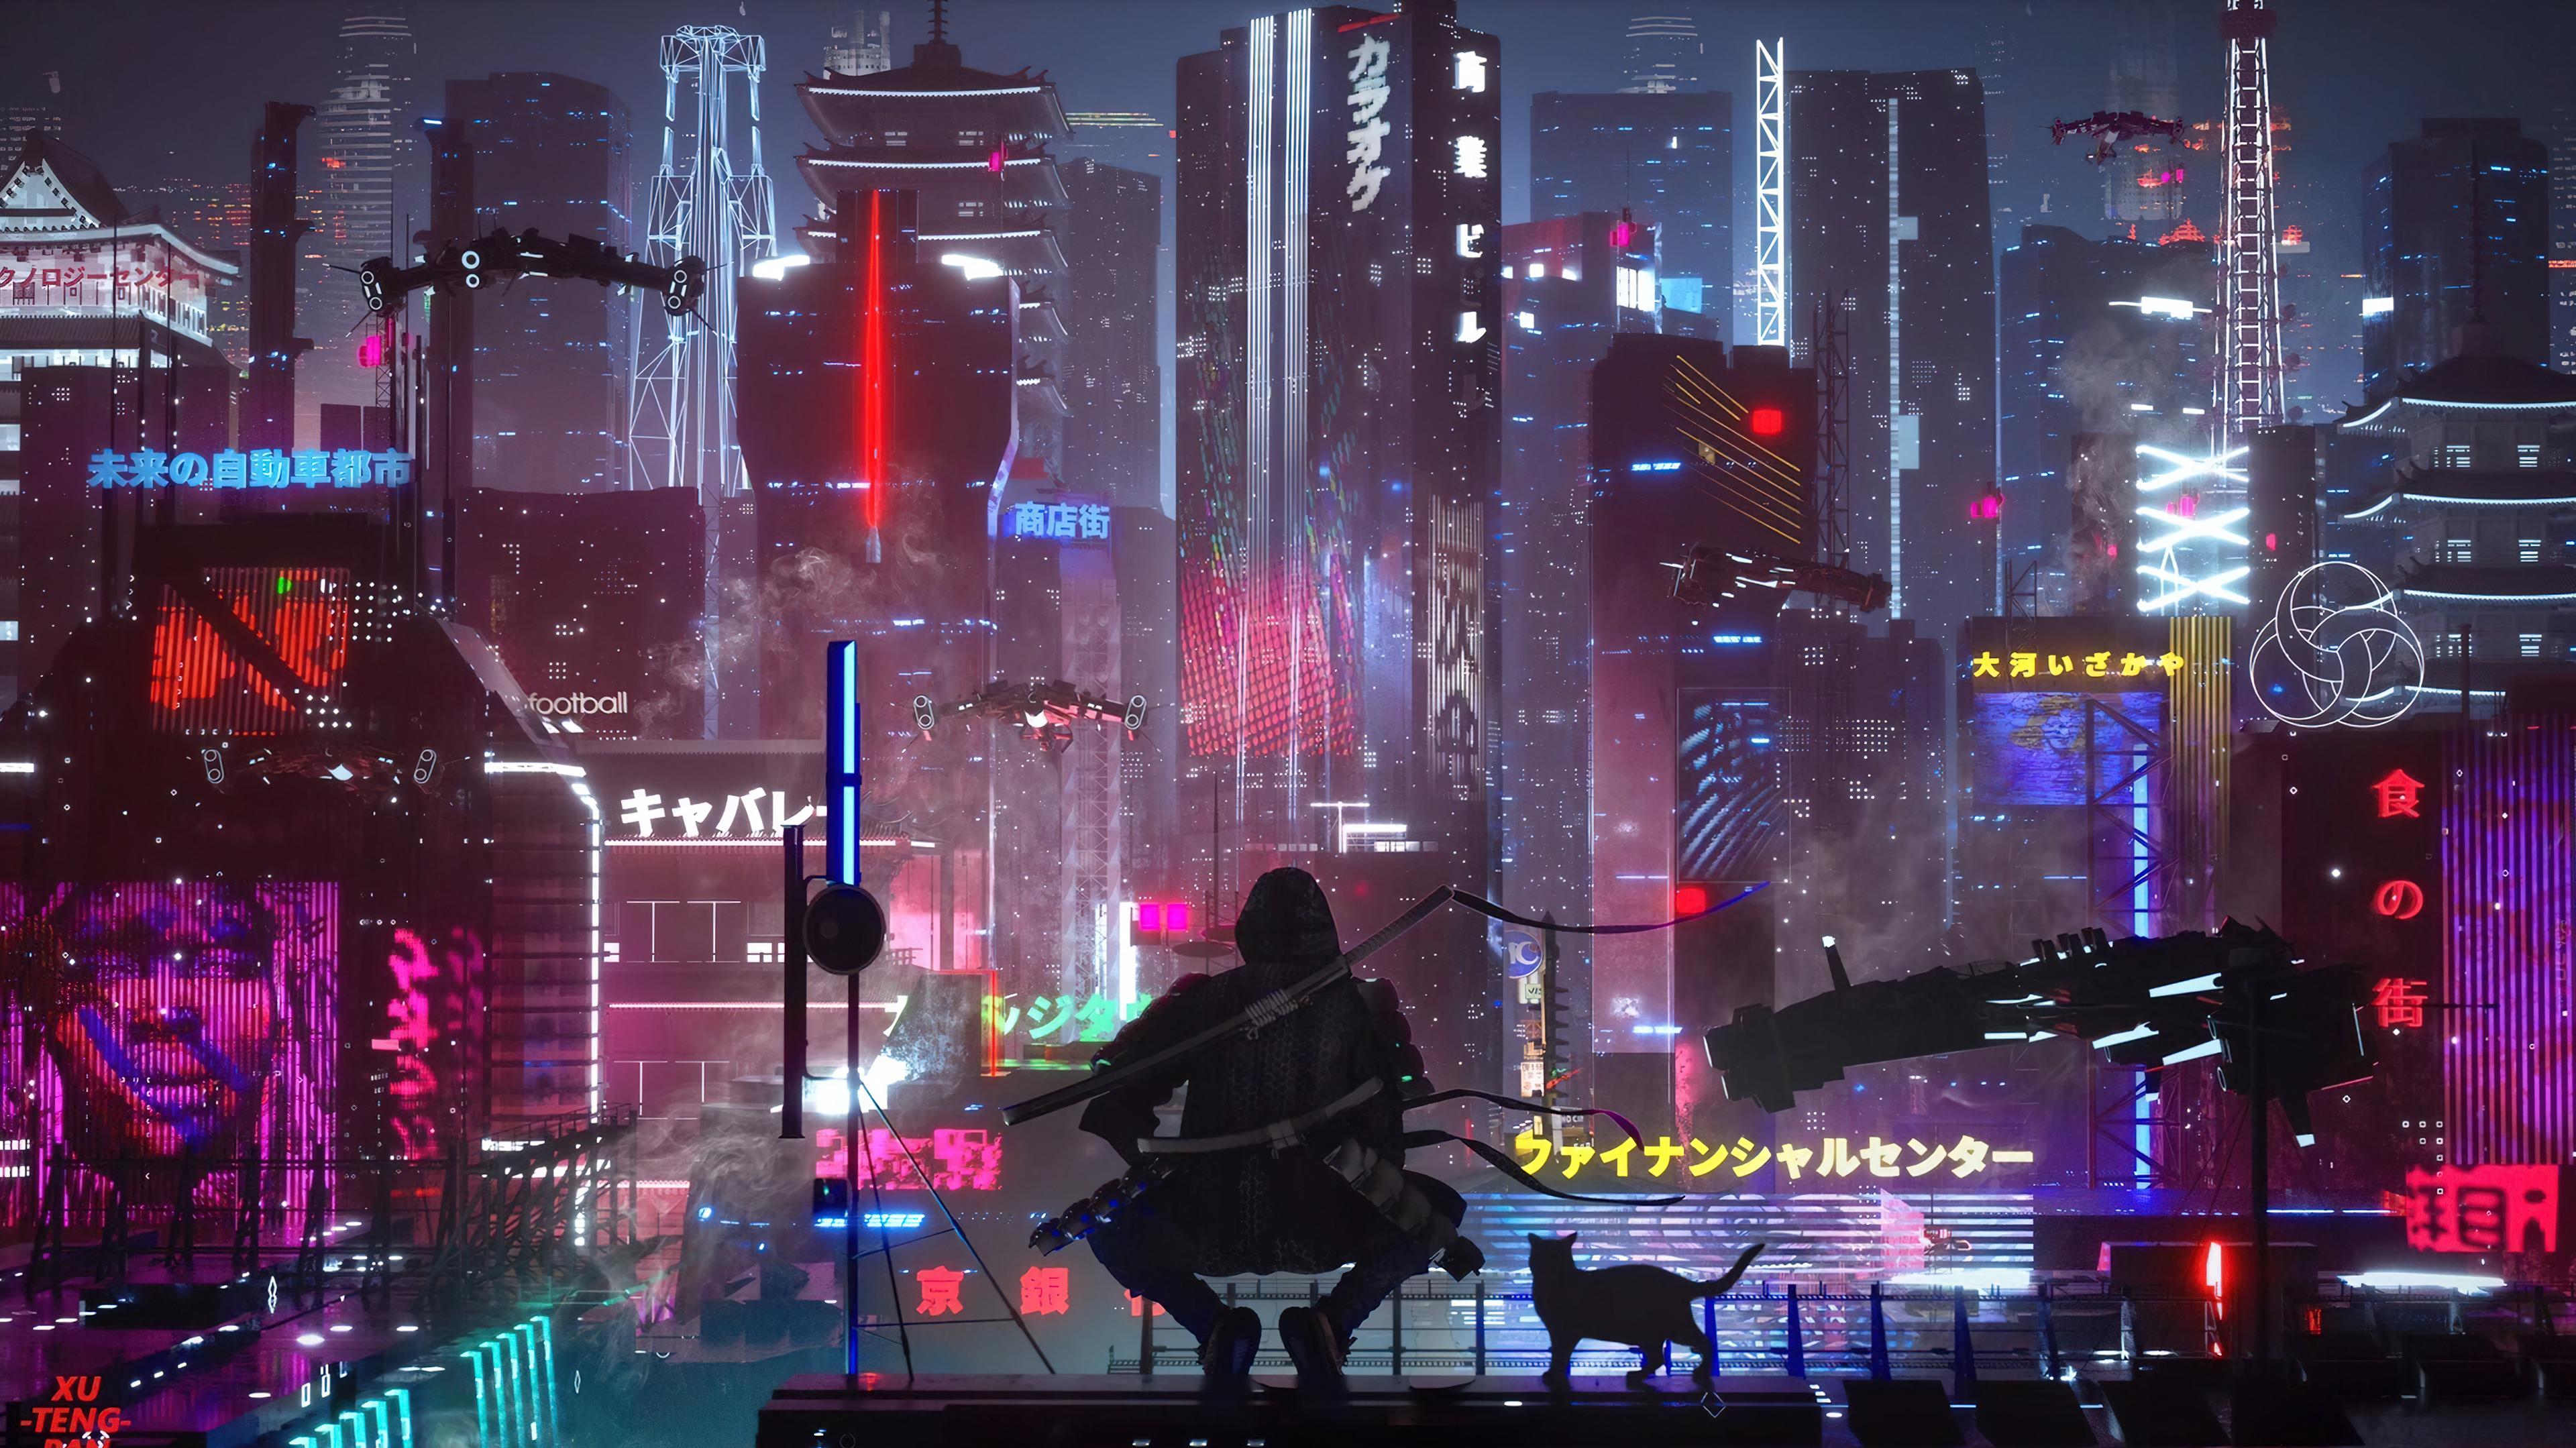 Ninja Cyberpunk Night City Wallpaper 4k 830h